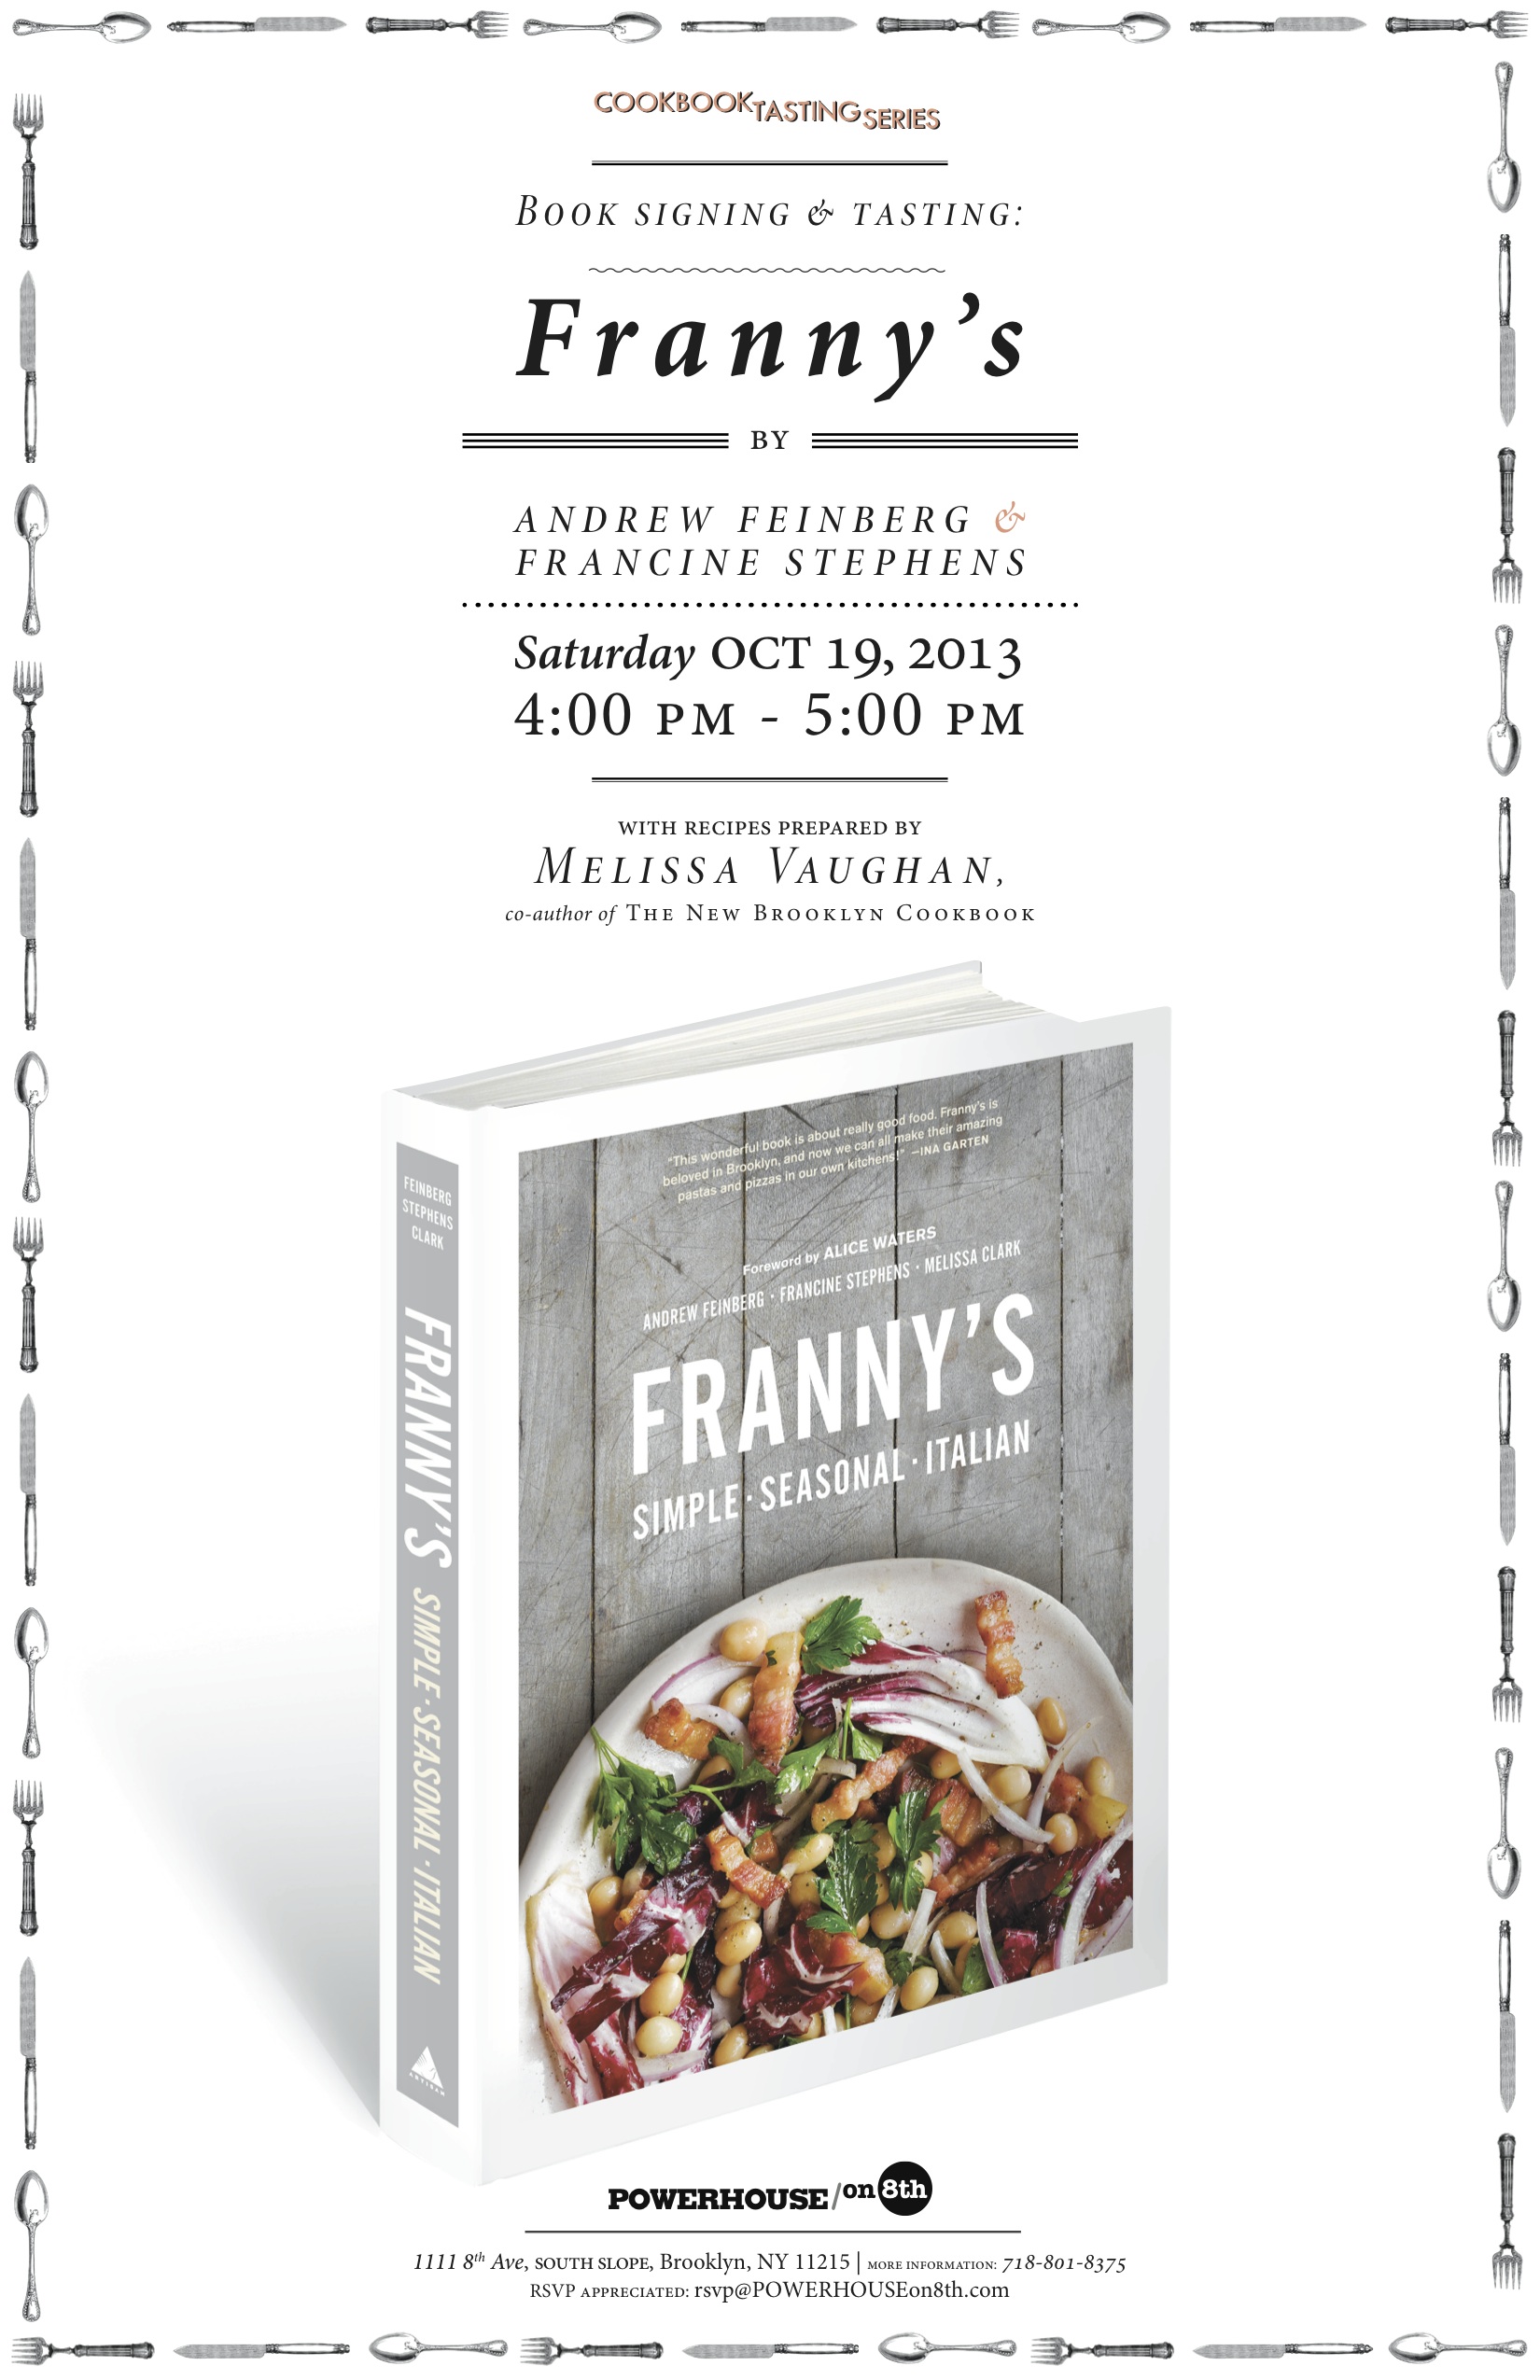 Cookbook Tasting Series with Melissa Vaughan: Franny's by Andrew Feinberg & Francine Stephens